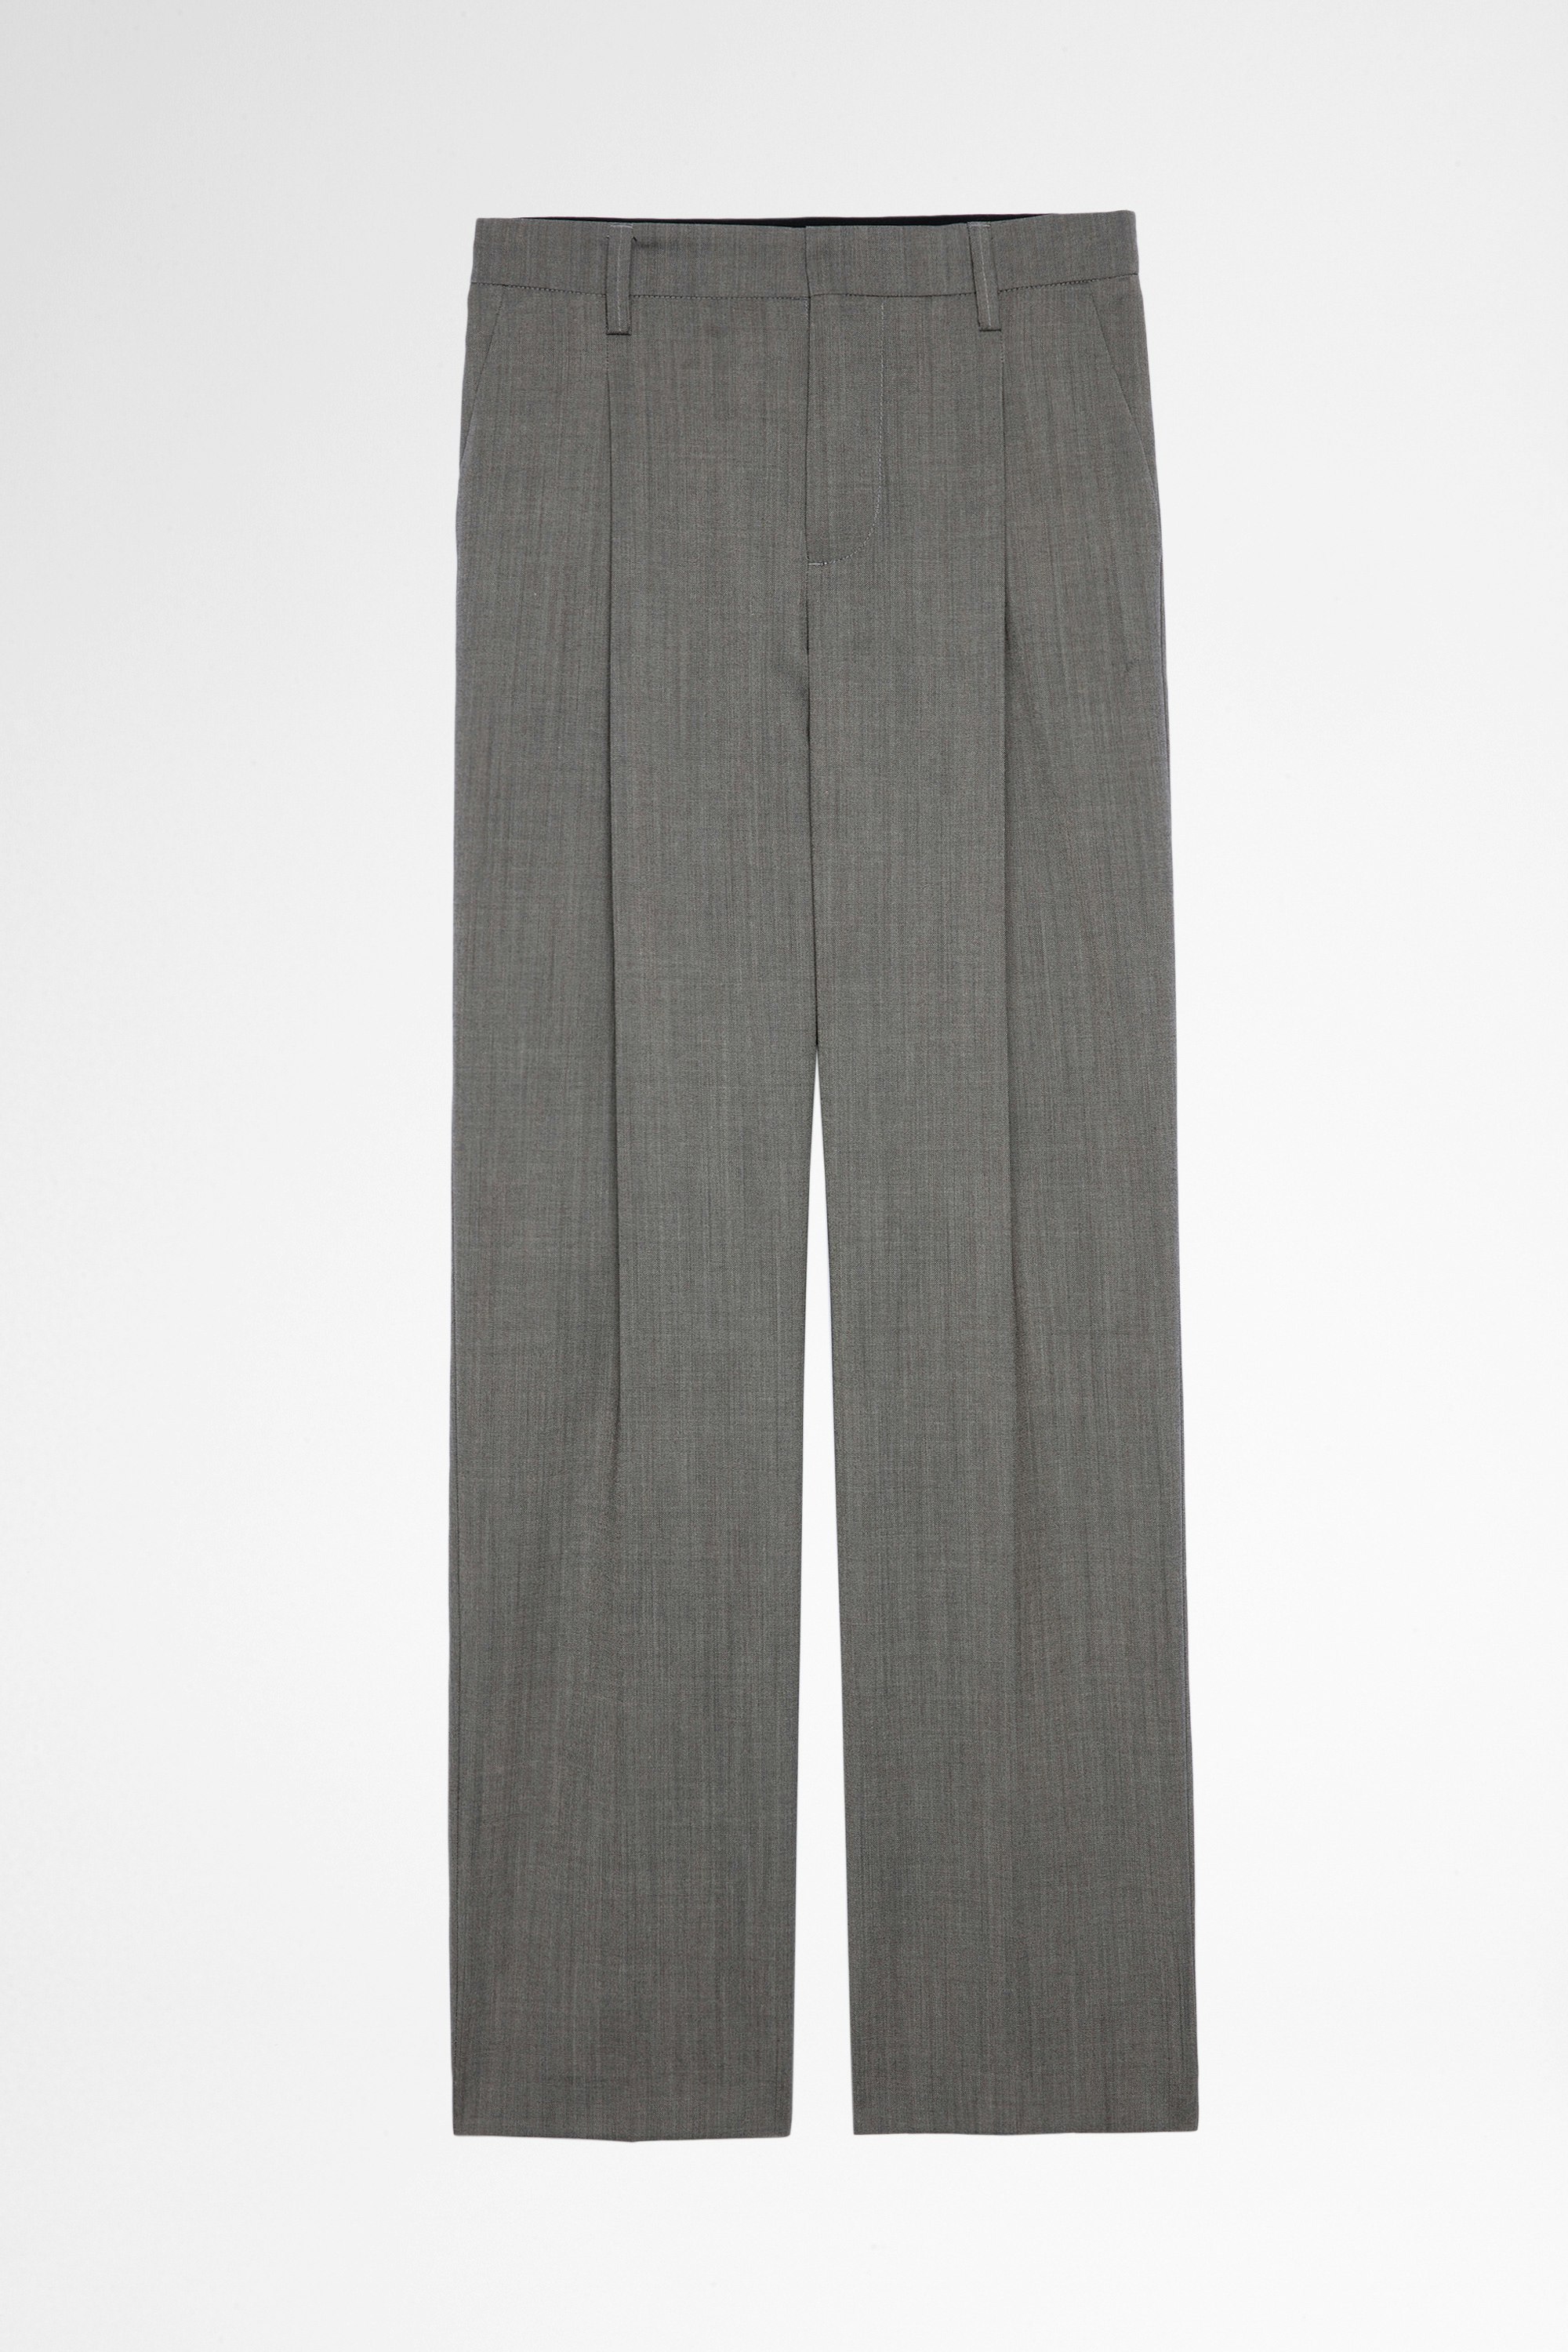 Gitane Pants Women’s tailored gray wool pants. Made with fibers from organic farming.